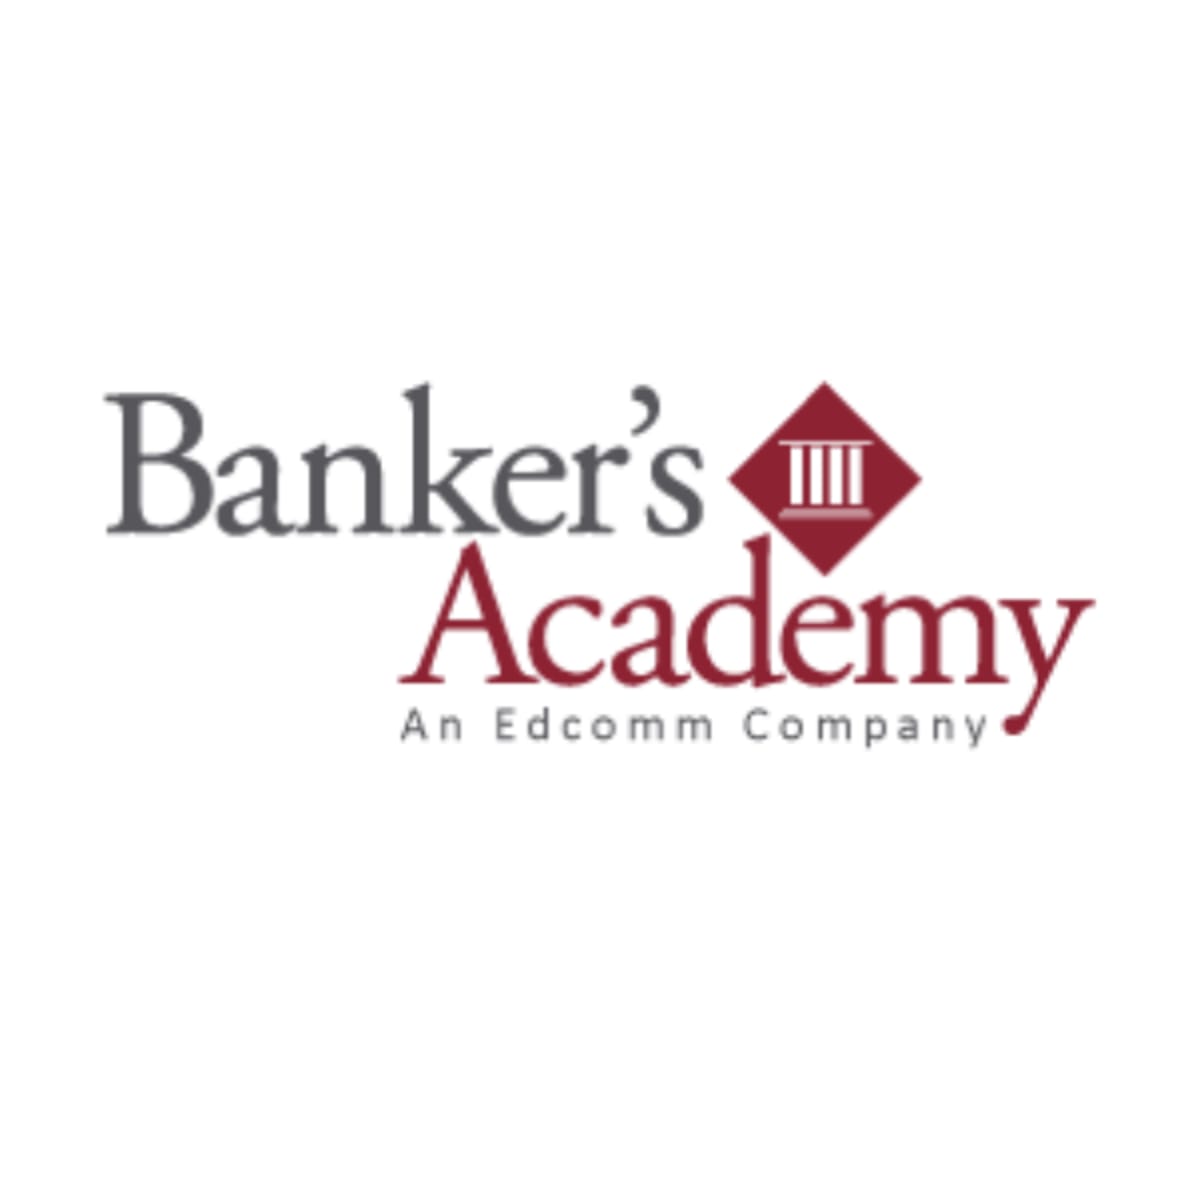 Banker's Academy logo partner